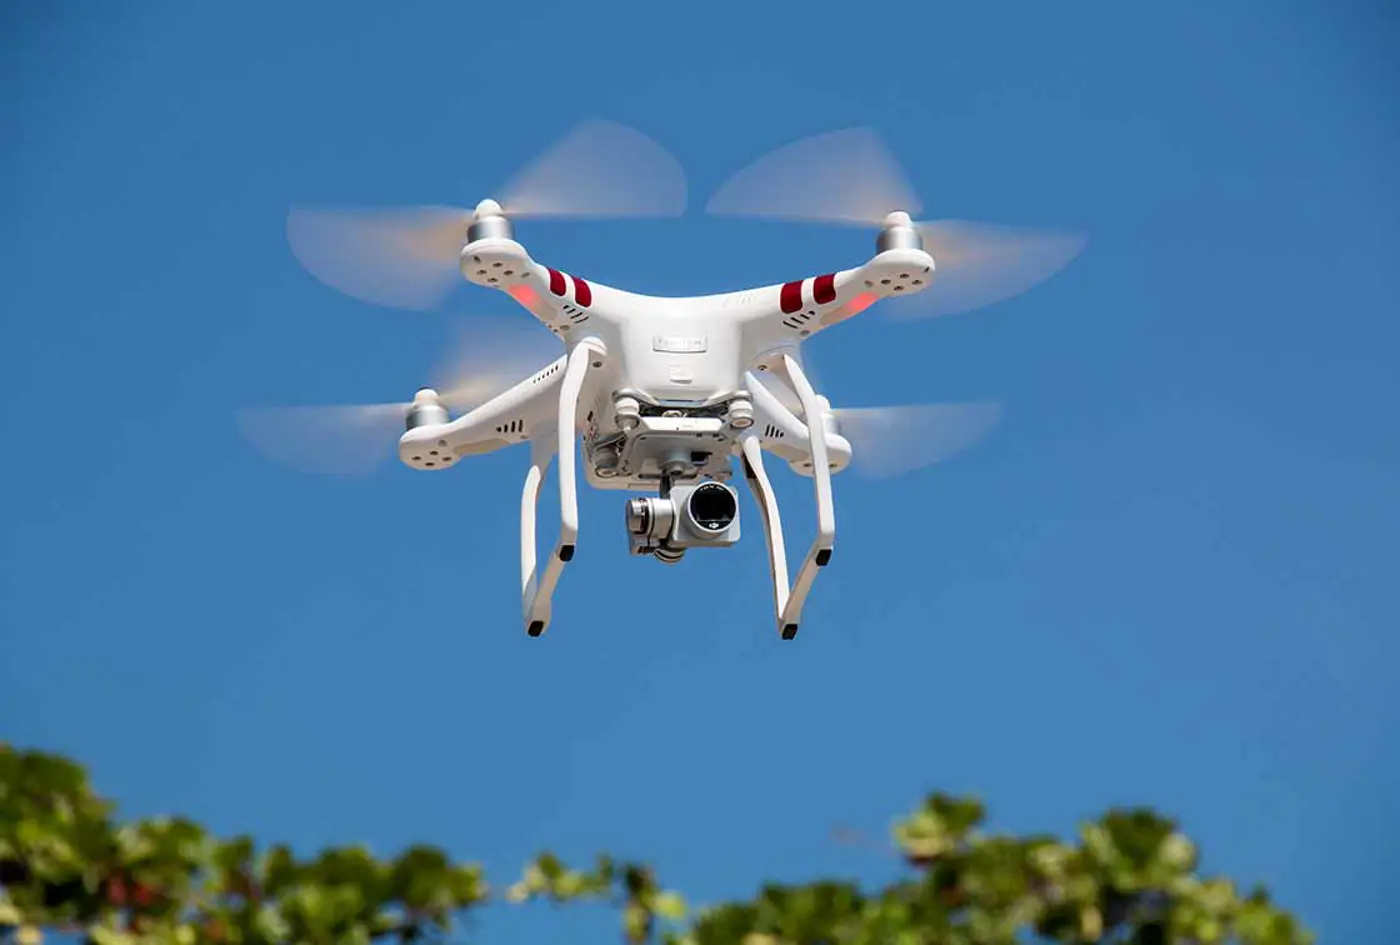 Drones in de bouwsector: hoe ver staat het met de wetgeving? / Les drones dans le secteur de la construction : où en est la législation?